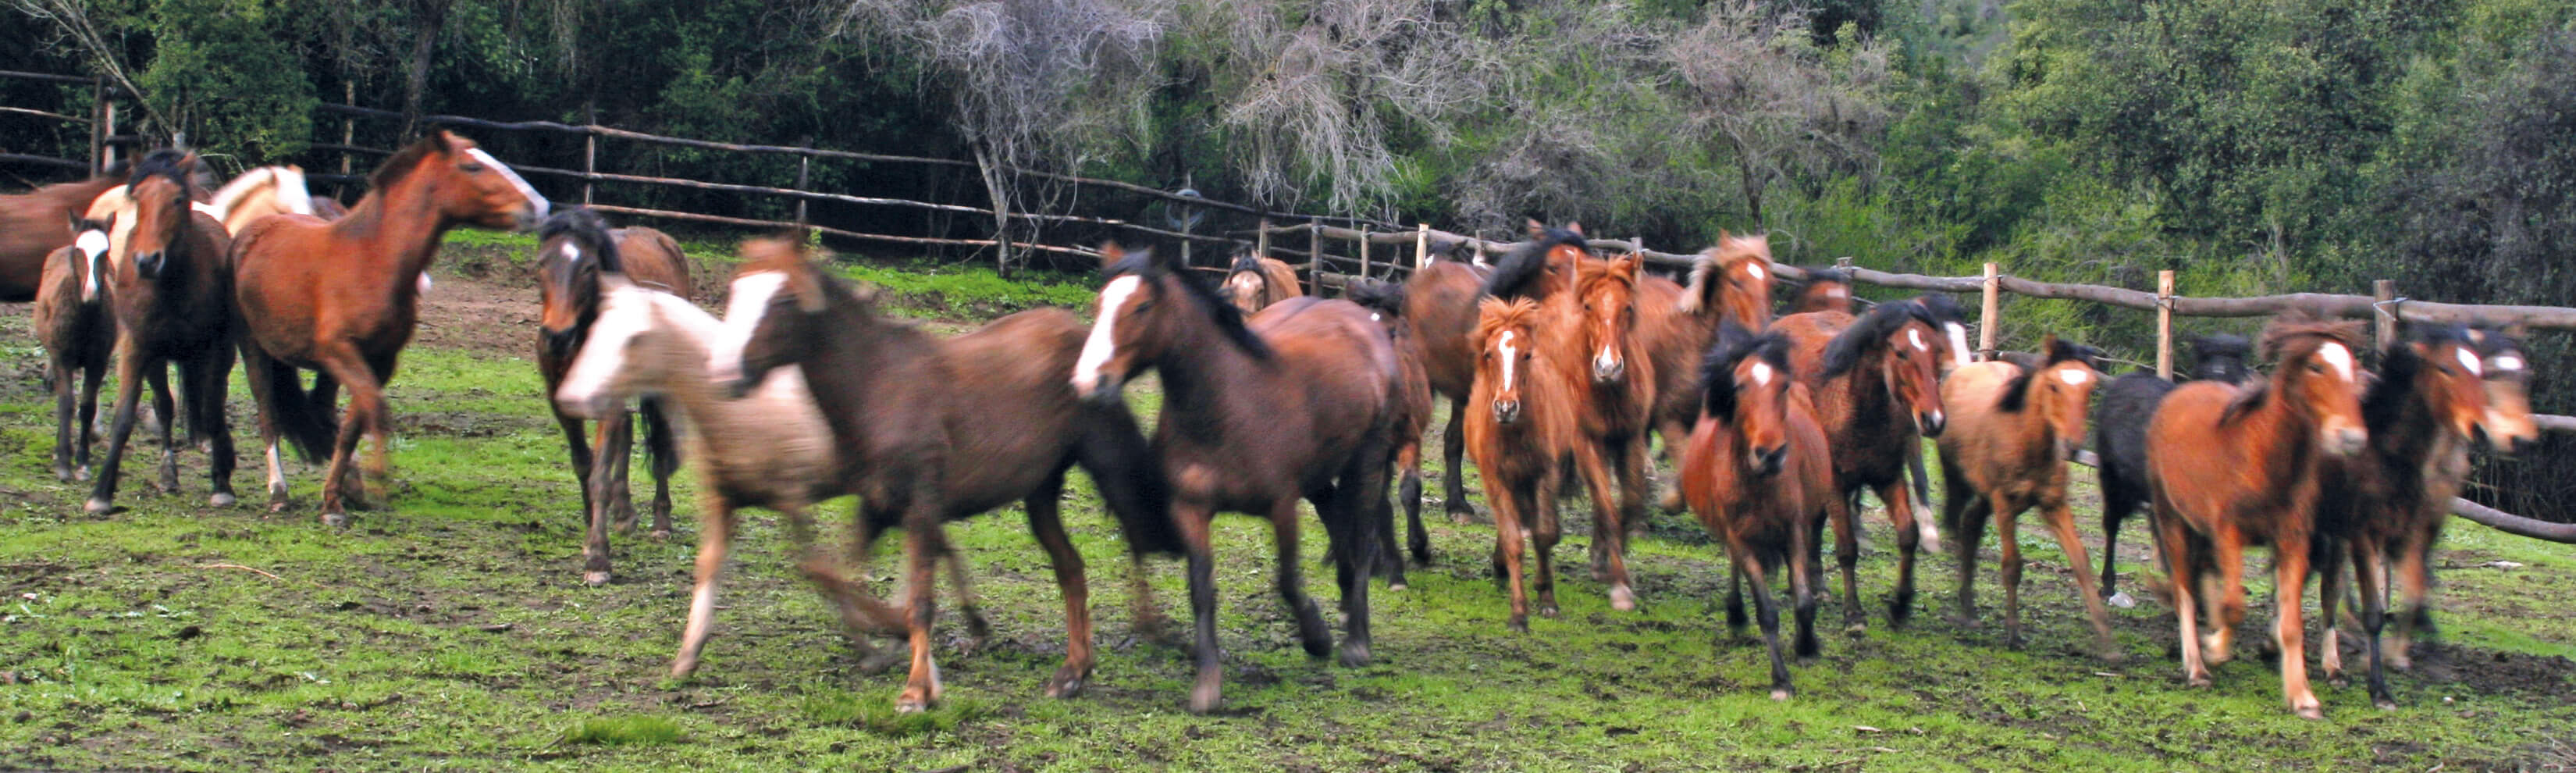 Wild horses roam the vineyards of Caliterra